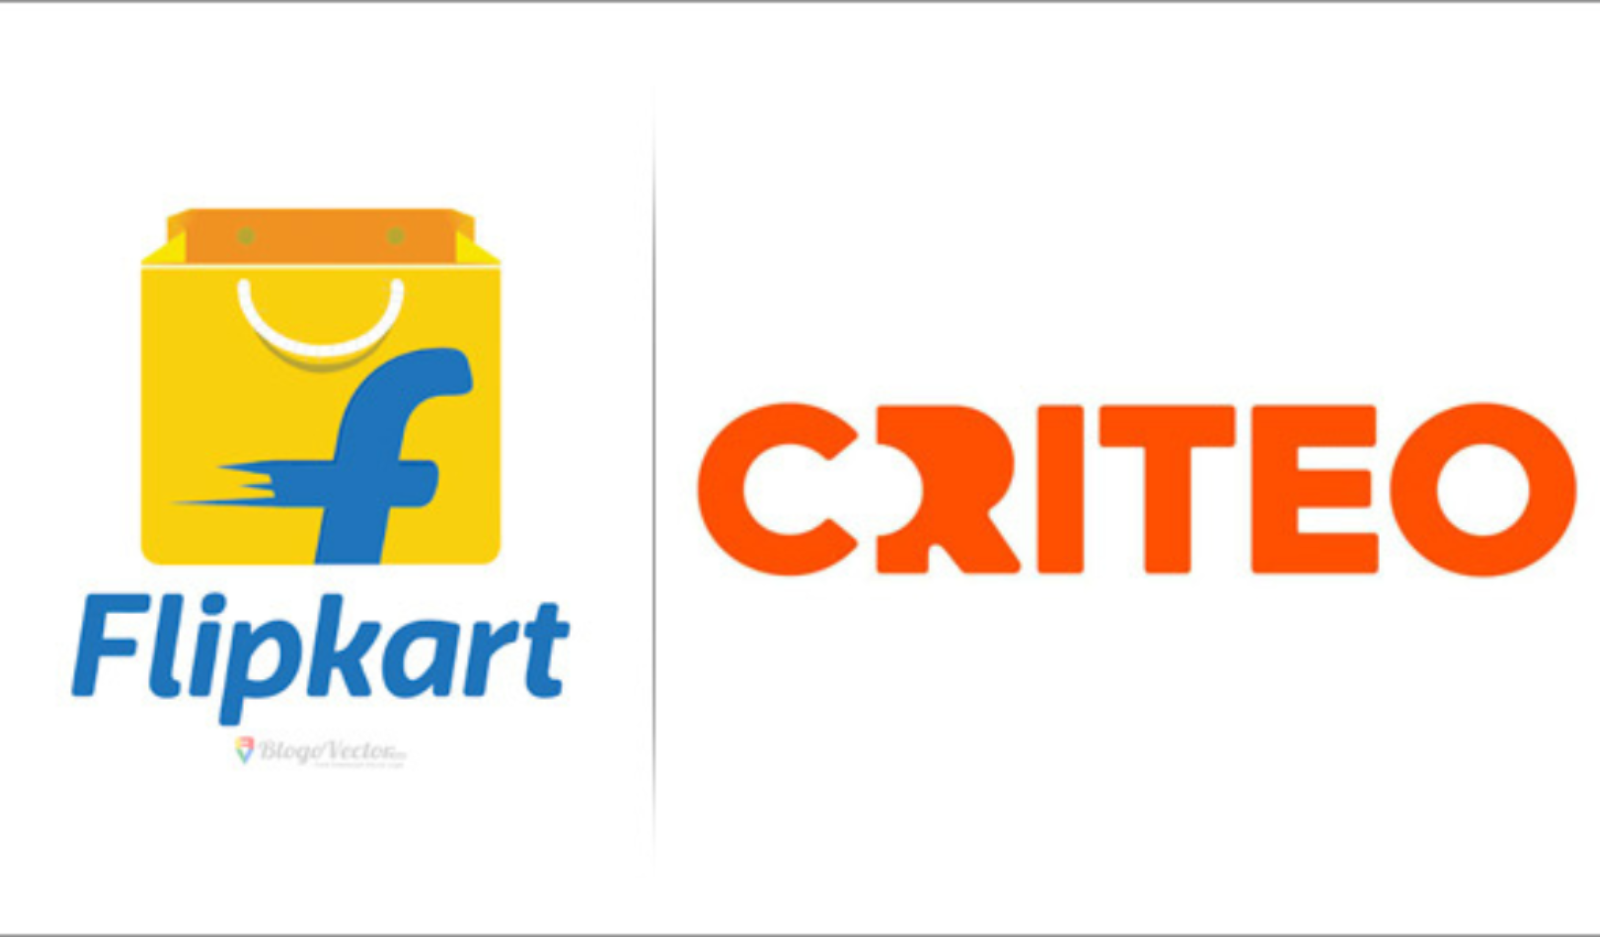 How Will Partnership With Criteo Benefit Flipkart’s AdTech Business?